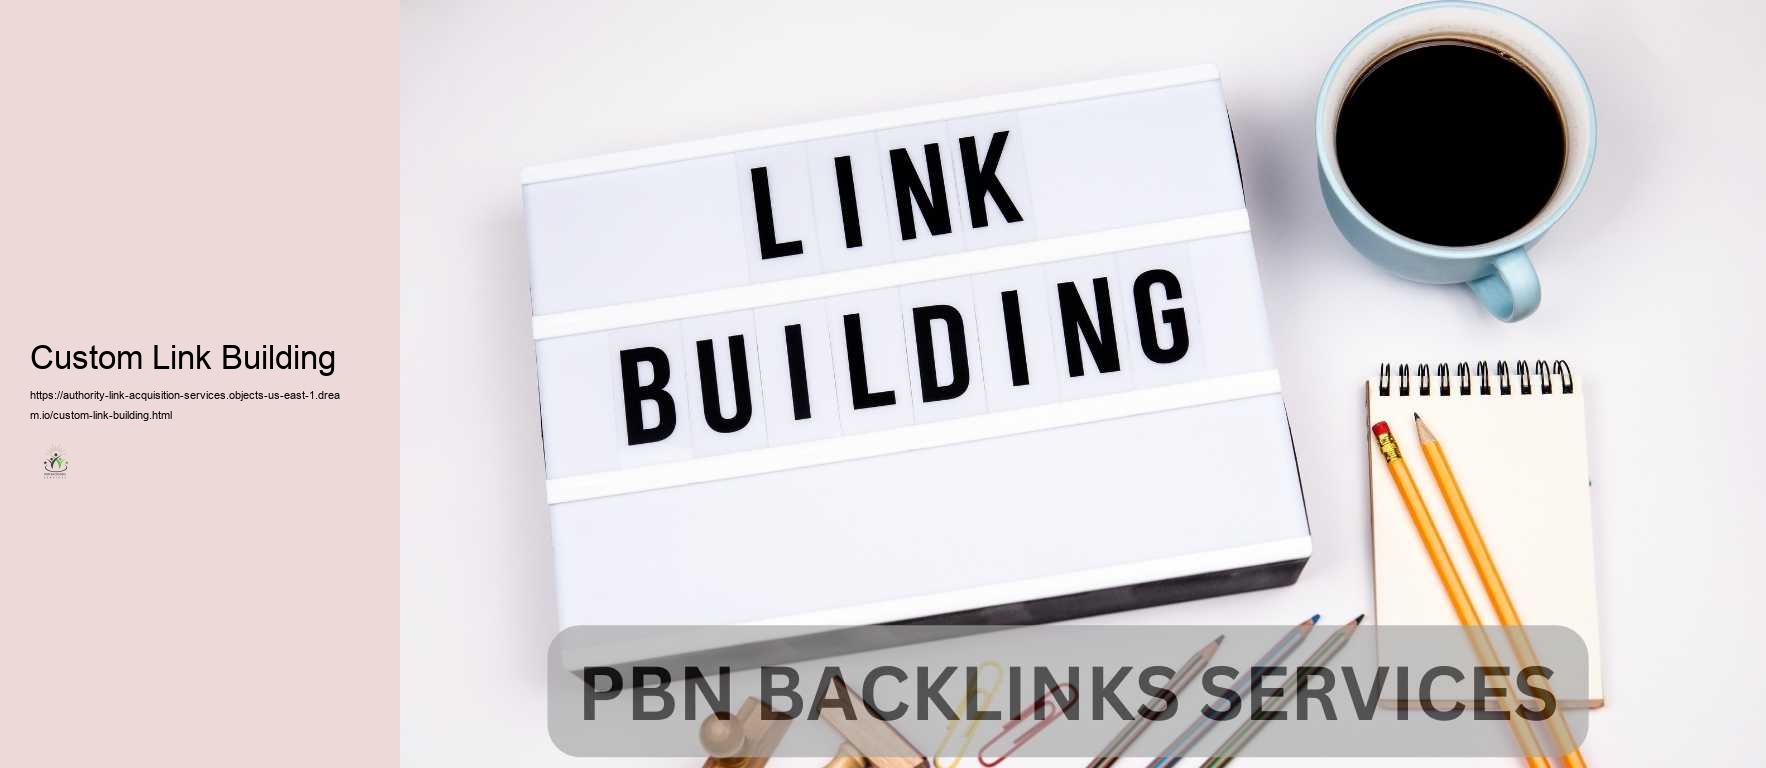 Custom Link Building